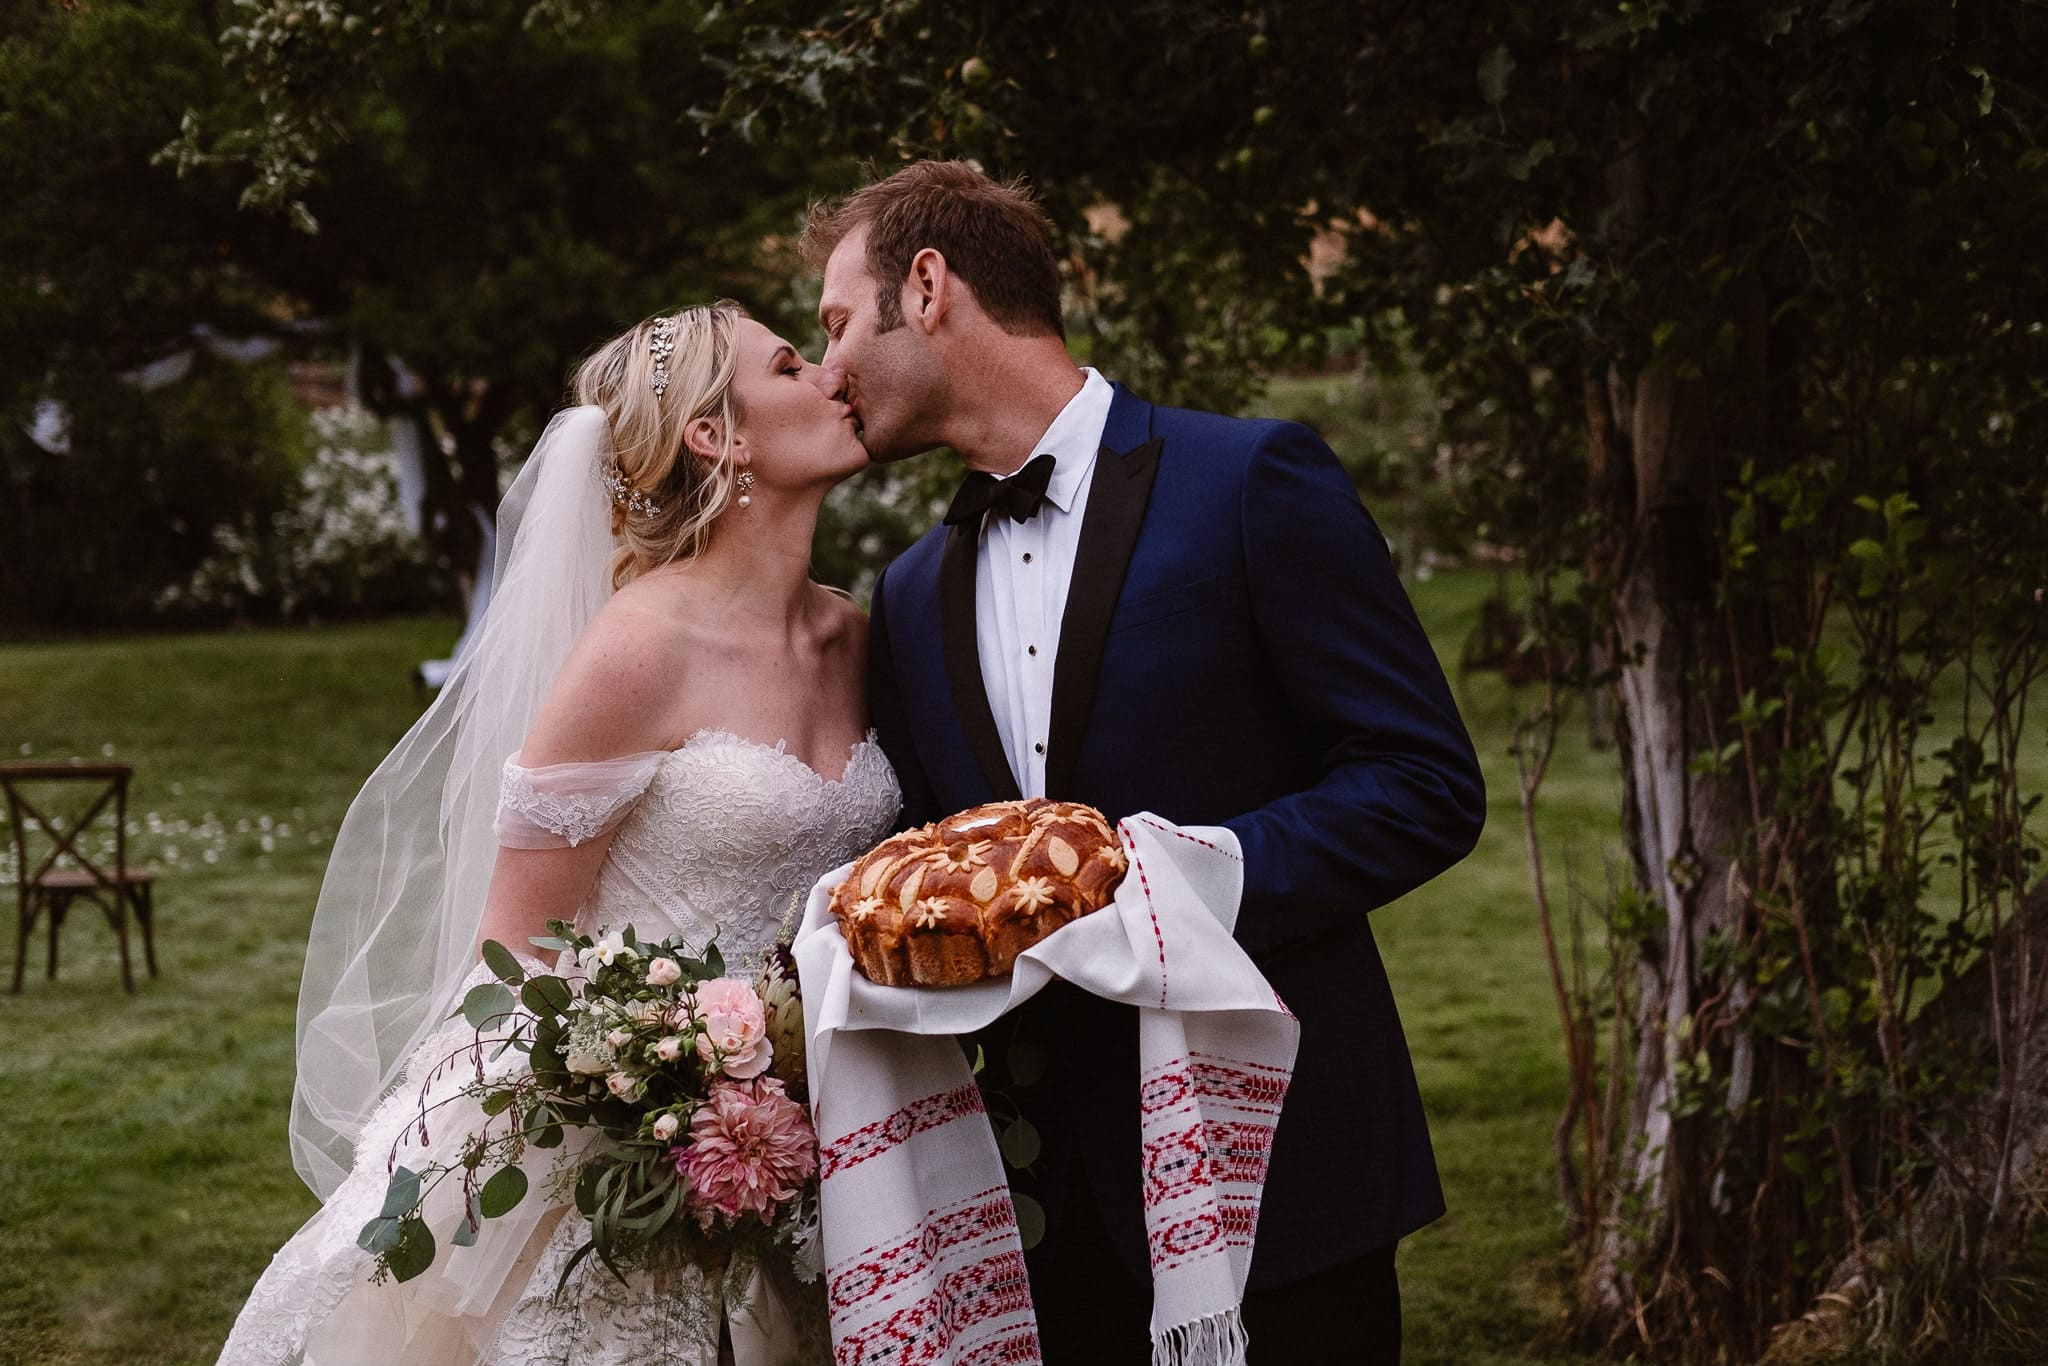 Aspen ranch wedding, Colorado mountain wedding photographer, private ranch wedding reception, Russian wedding bread loaf with salt